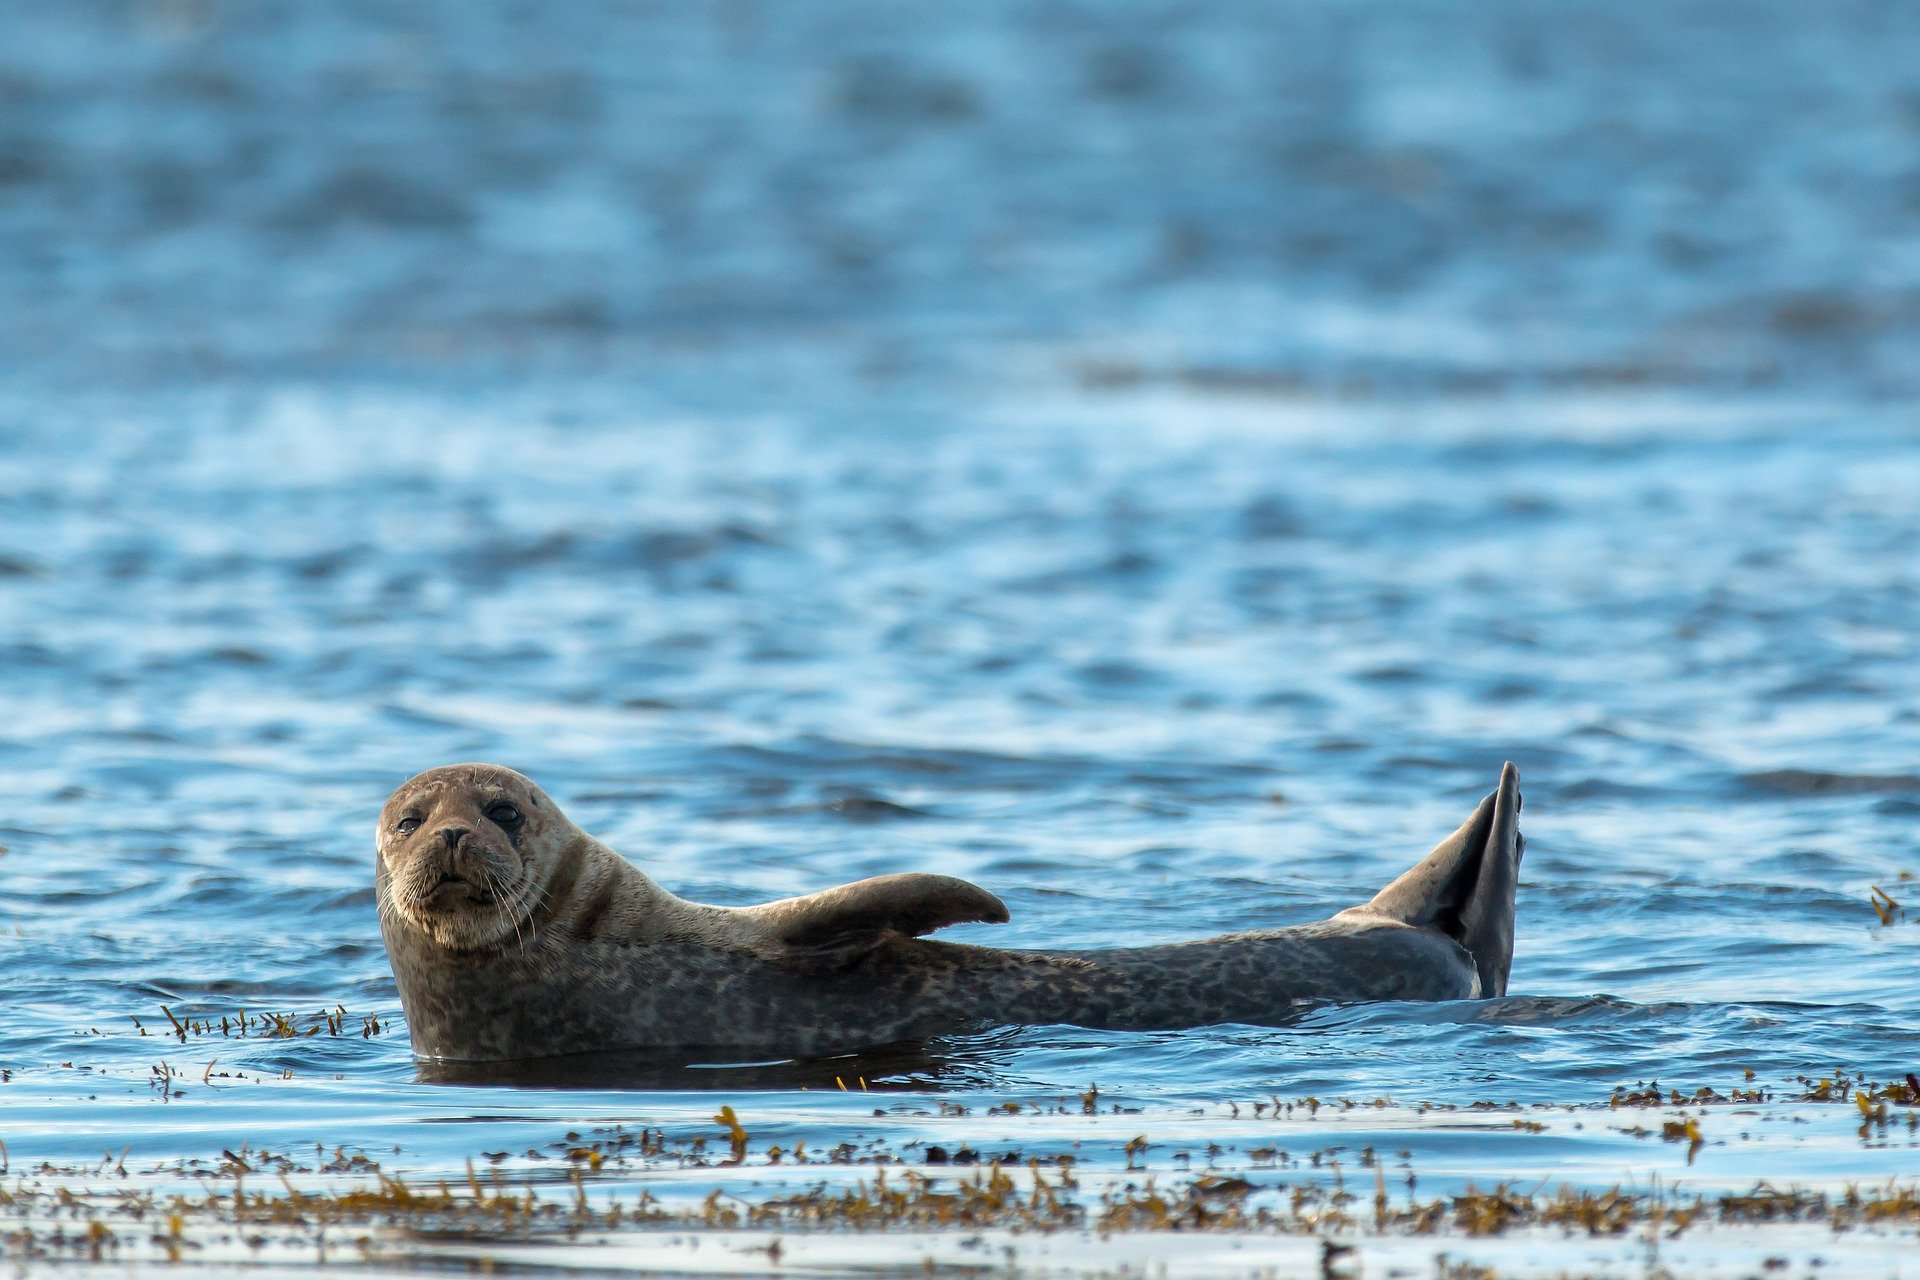 Grey seal waving from water